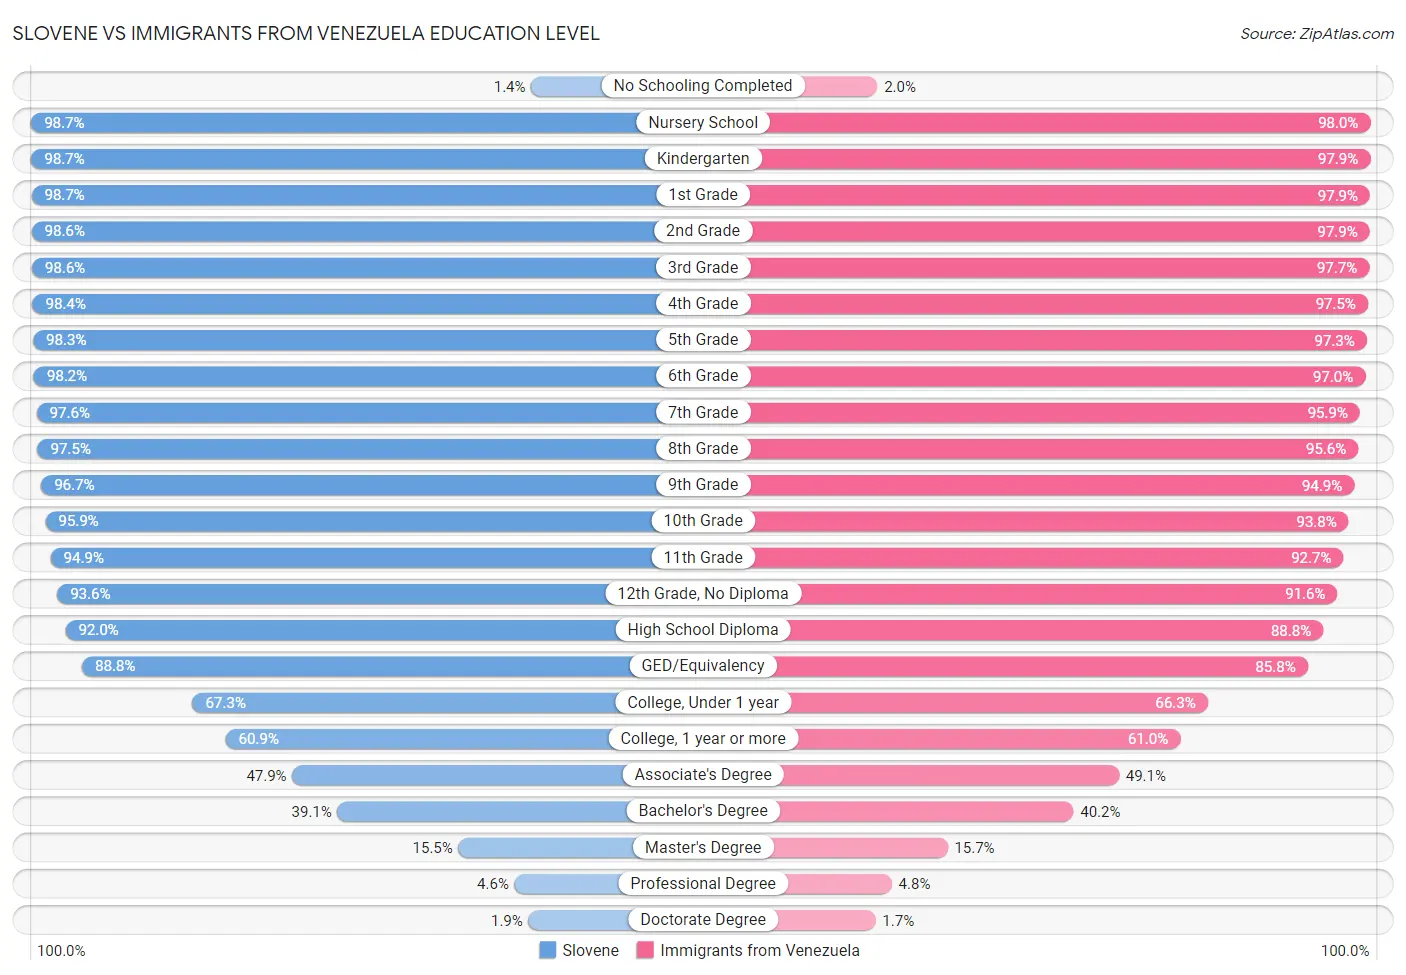 Slovene vs Immigrants from Venezuela Education Level